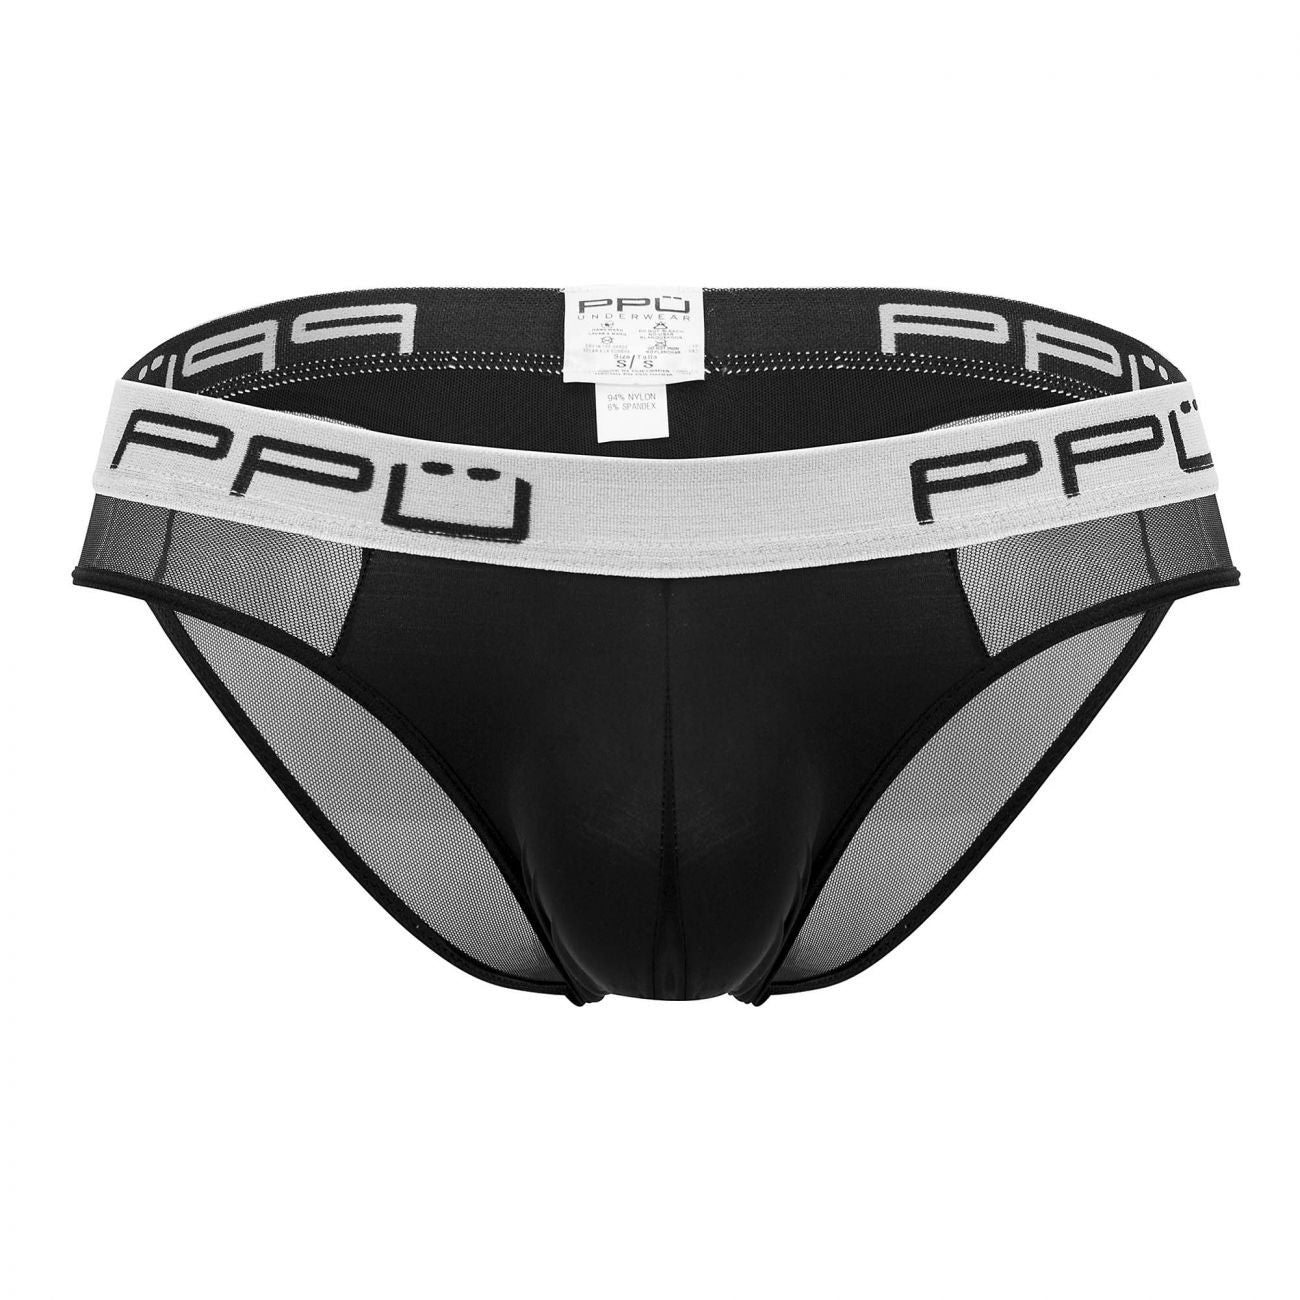 PPU 2113 Mesh Bikini Thongs Black